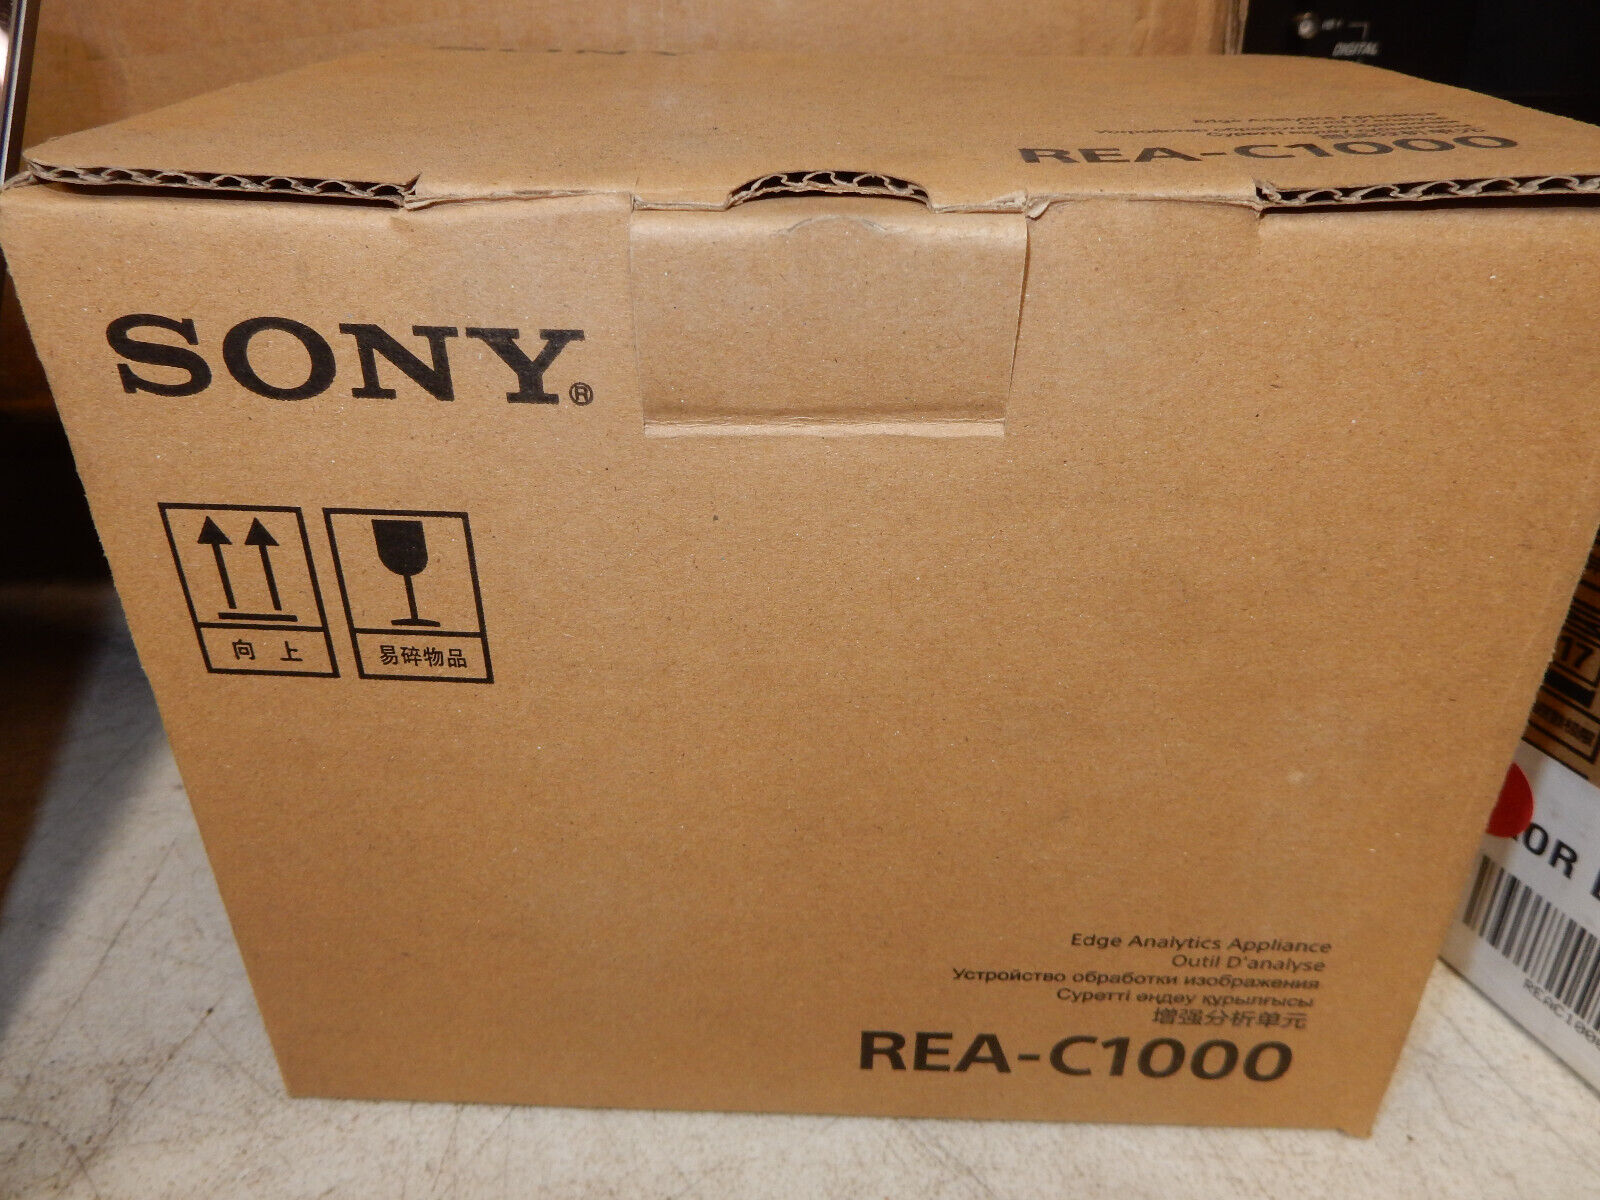 Sony Edge Analytics Appliance Box - REA-C1000